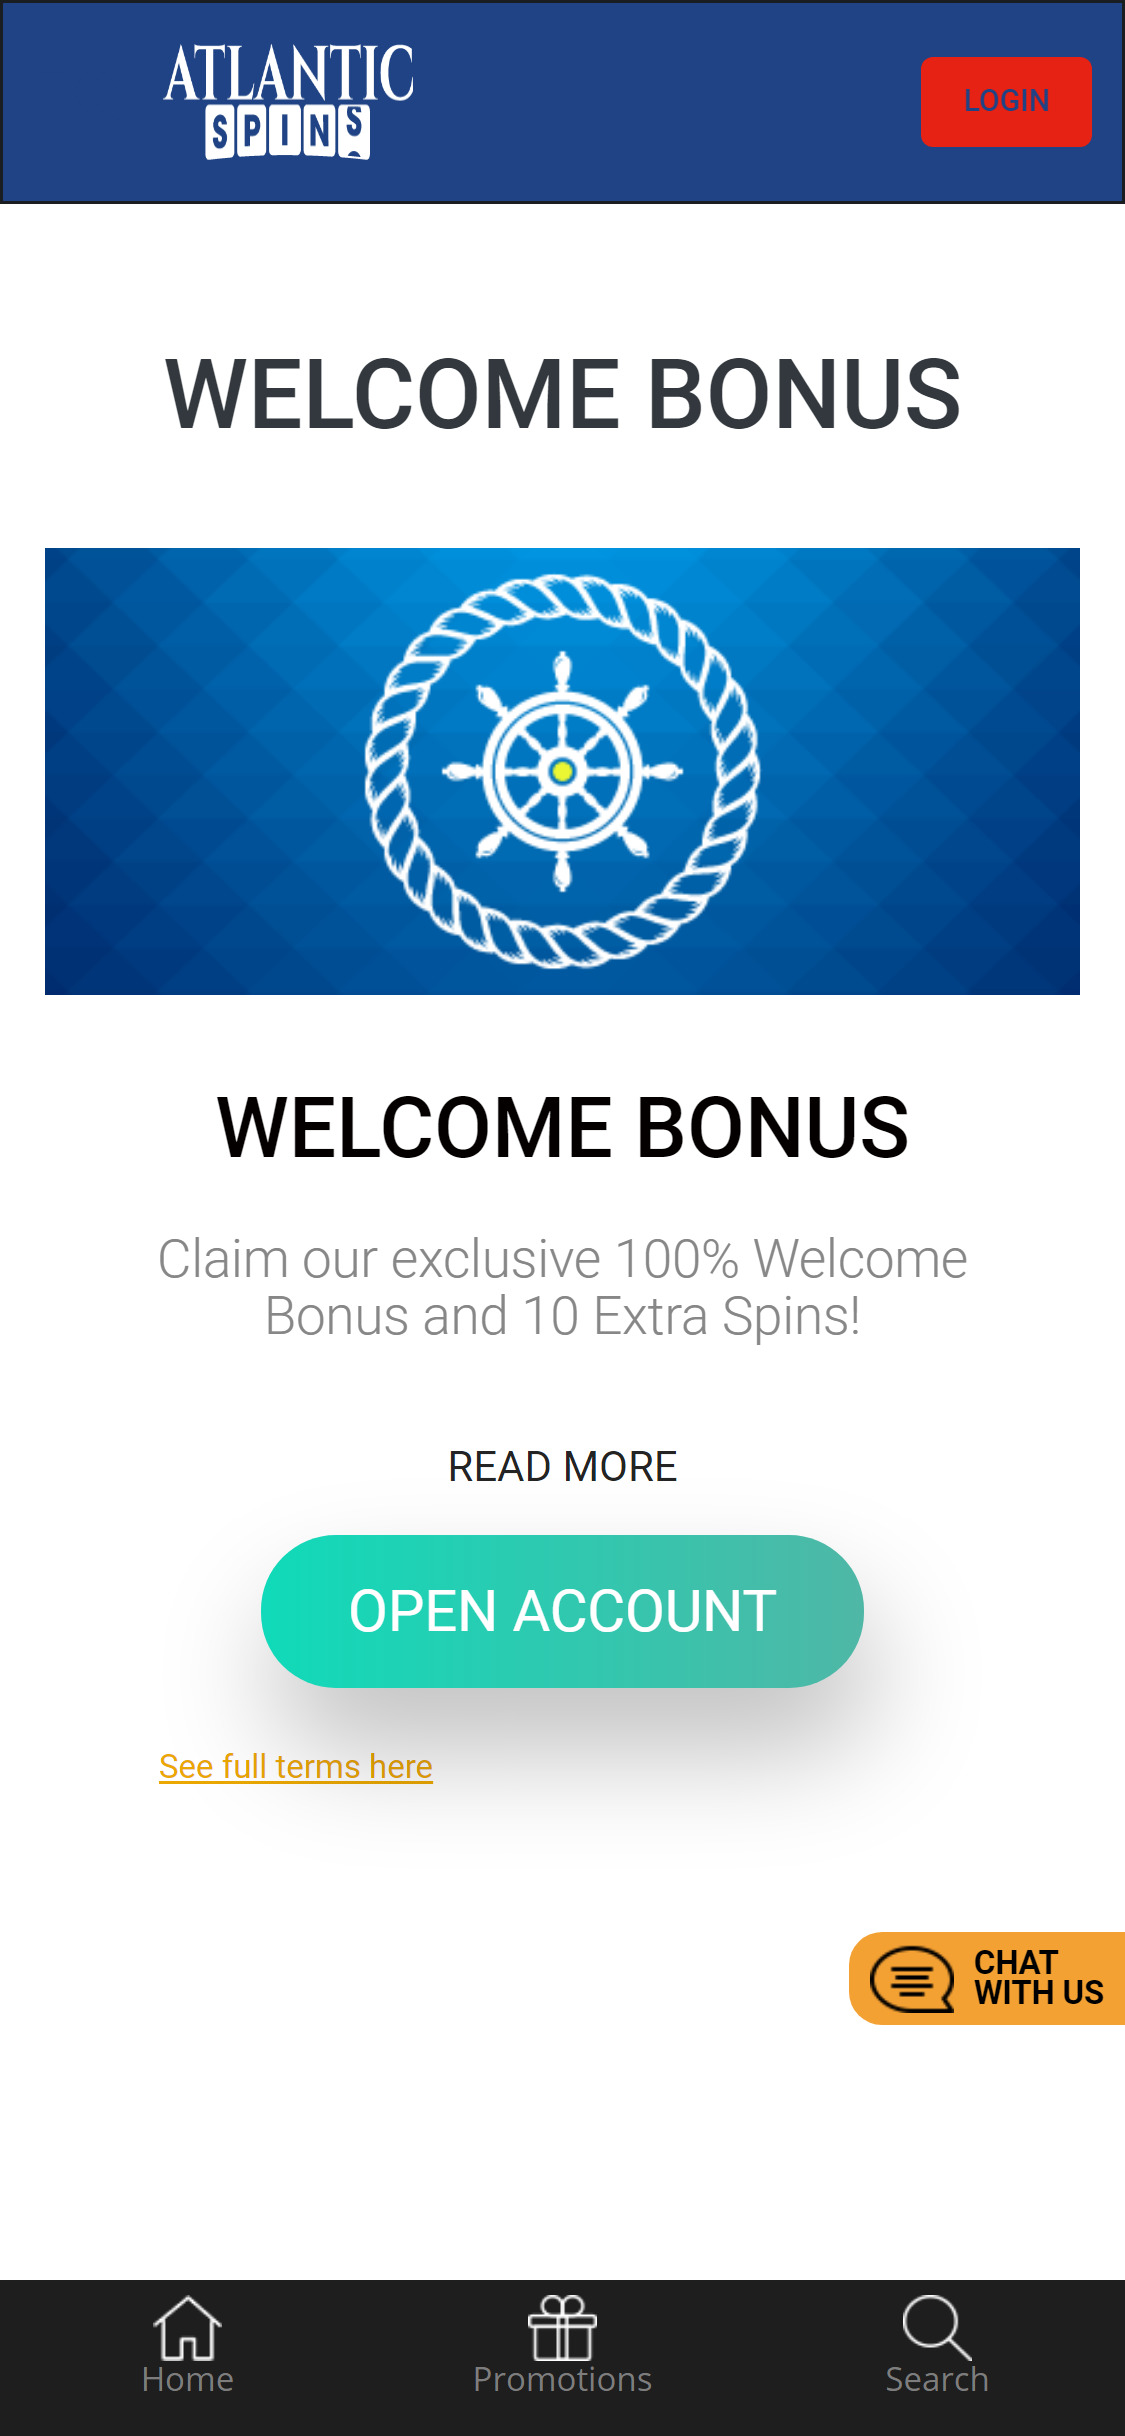 Atlantic Spins Casino Mobile No Deposit Bonus Review